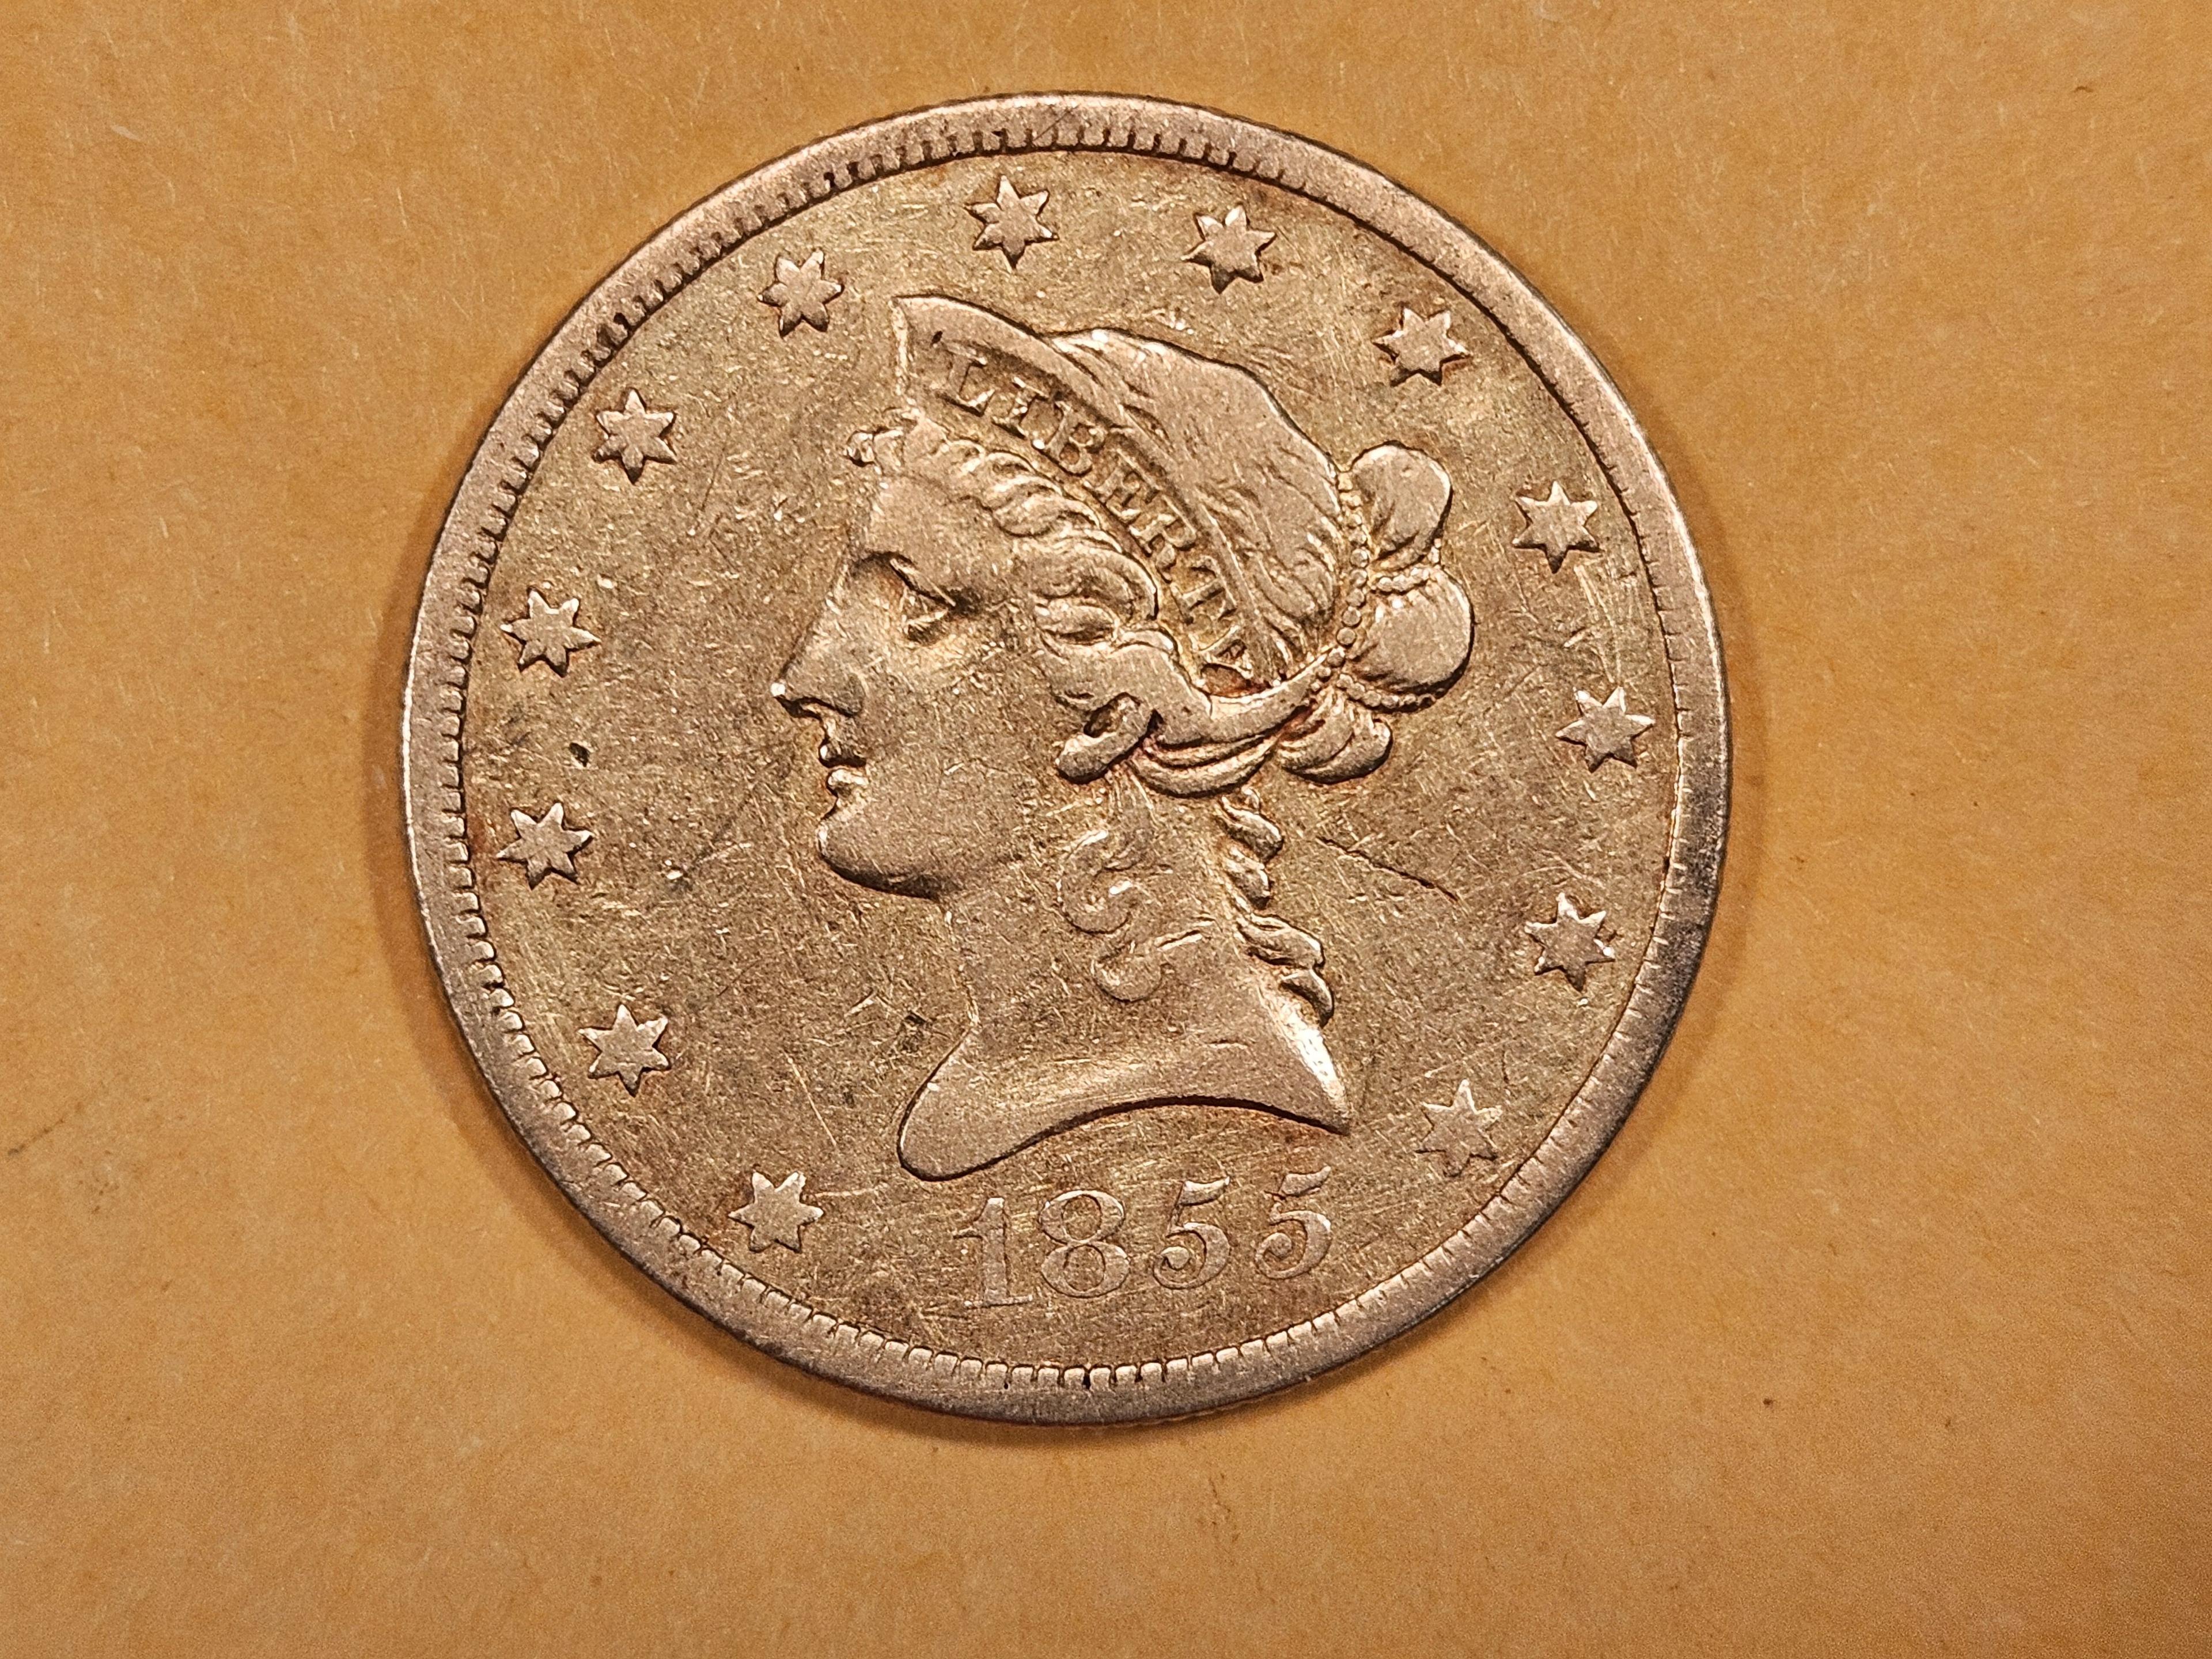 * SEMI-KEY! GOLD! 1855-O Liberty Head Gold Ten Dollar in Very Fine